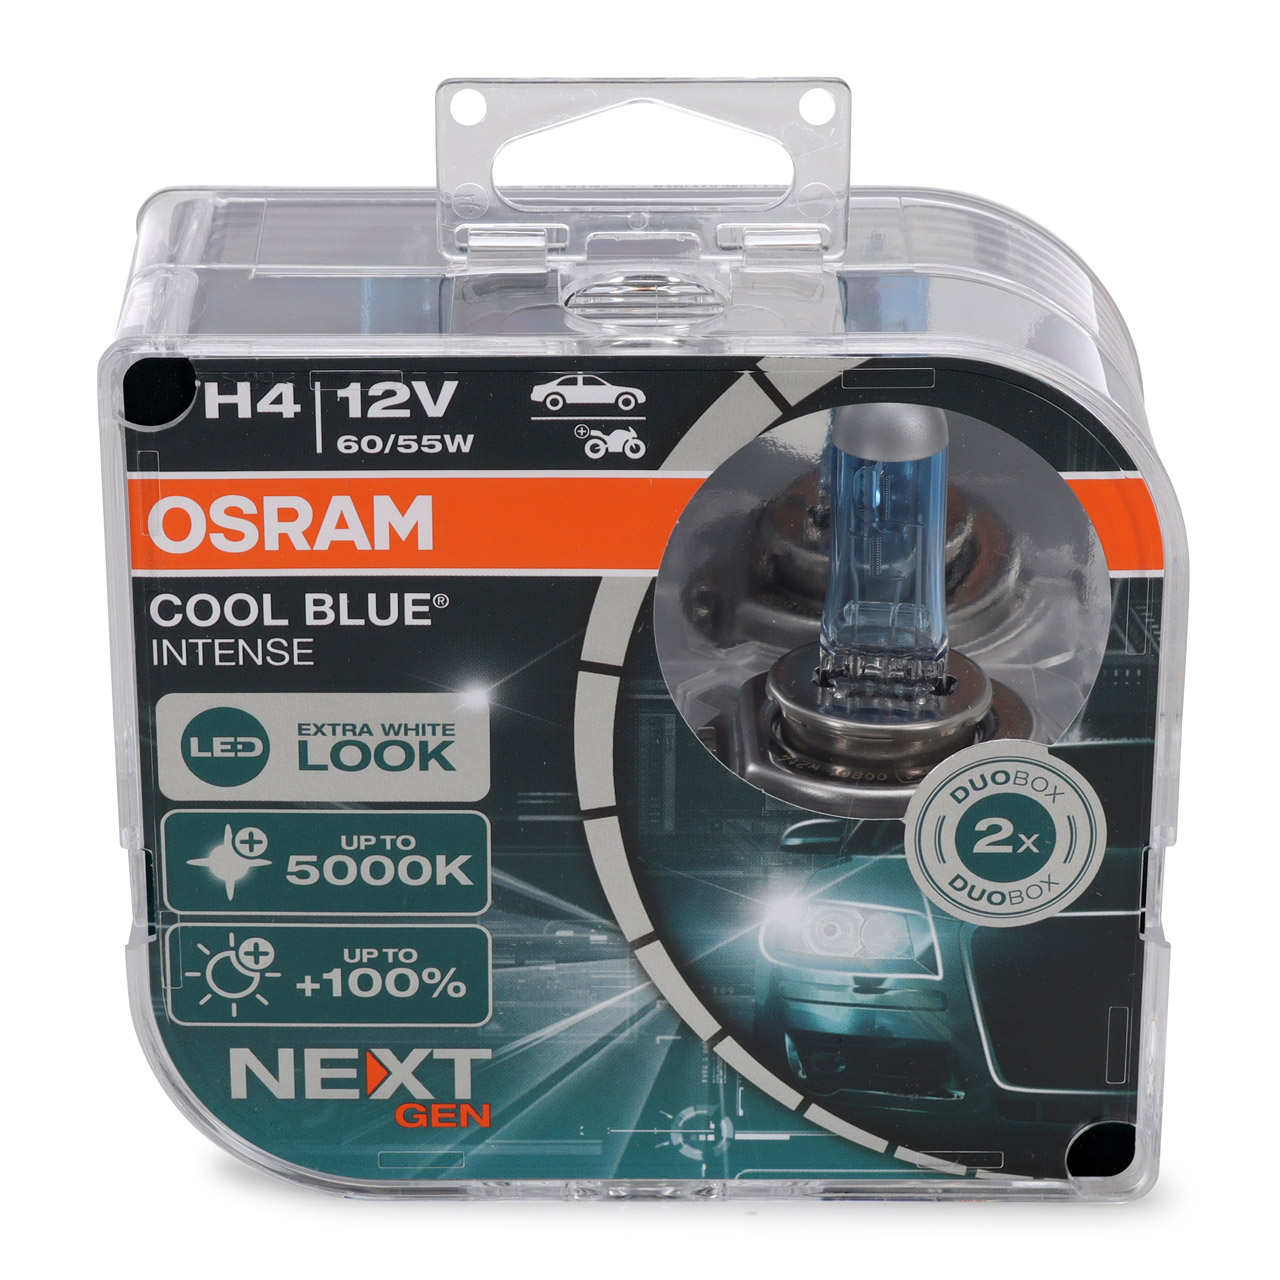 2x OSRAM Glühlampe H4 COOL BLUE INTENSE Next Gen 12V 60/55W P43t +100% 5000K